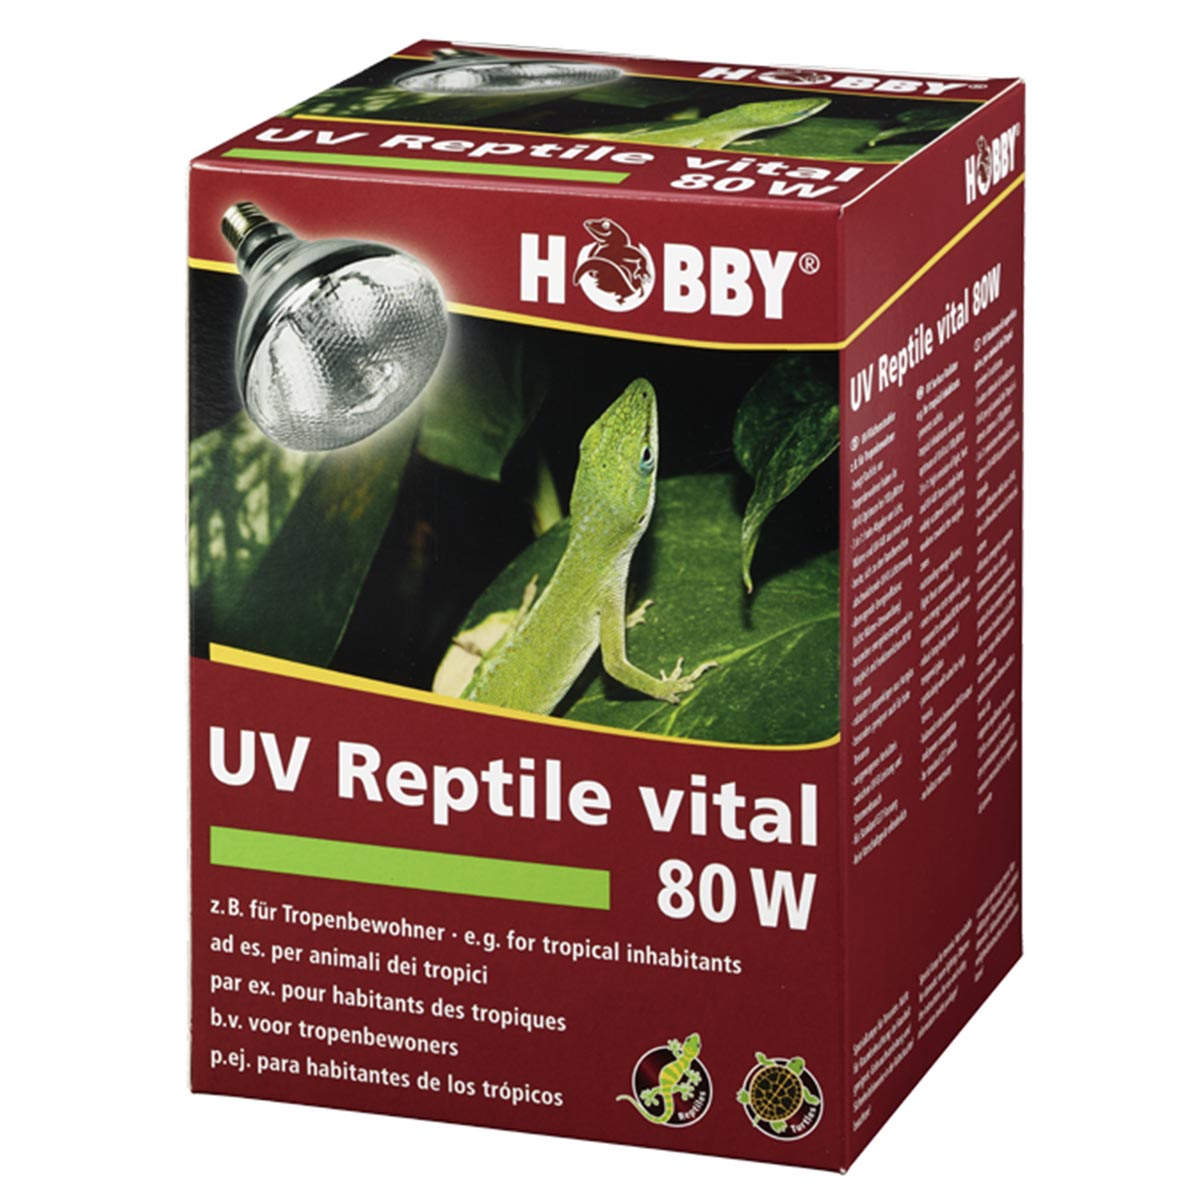 Hobby UV-Reptile vital